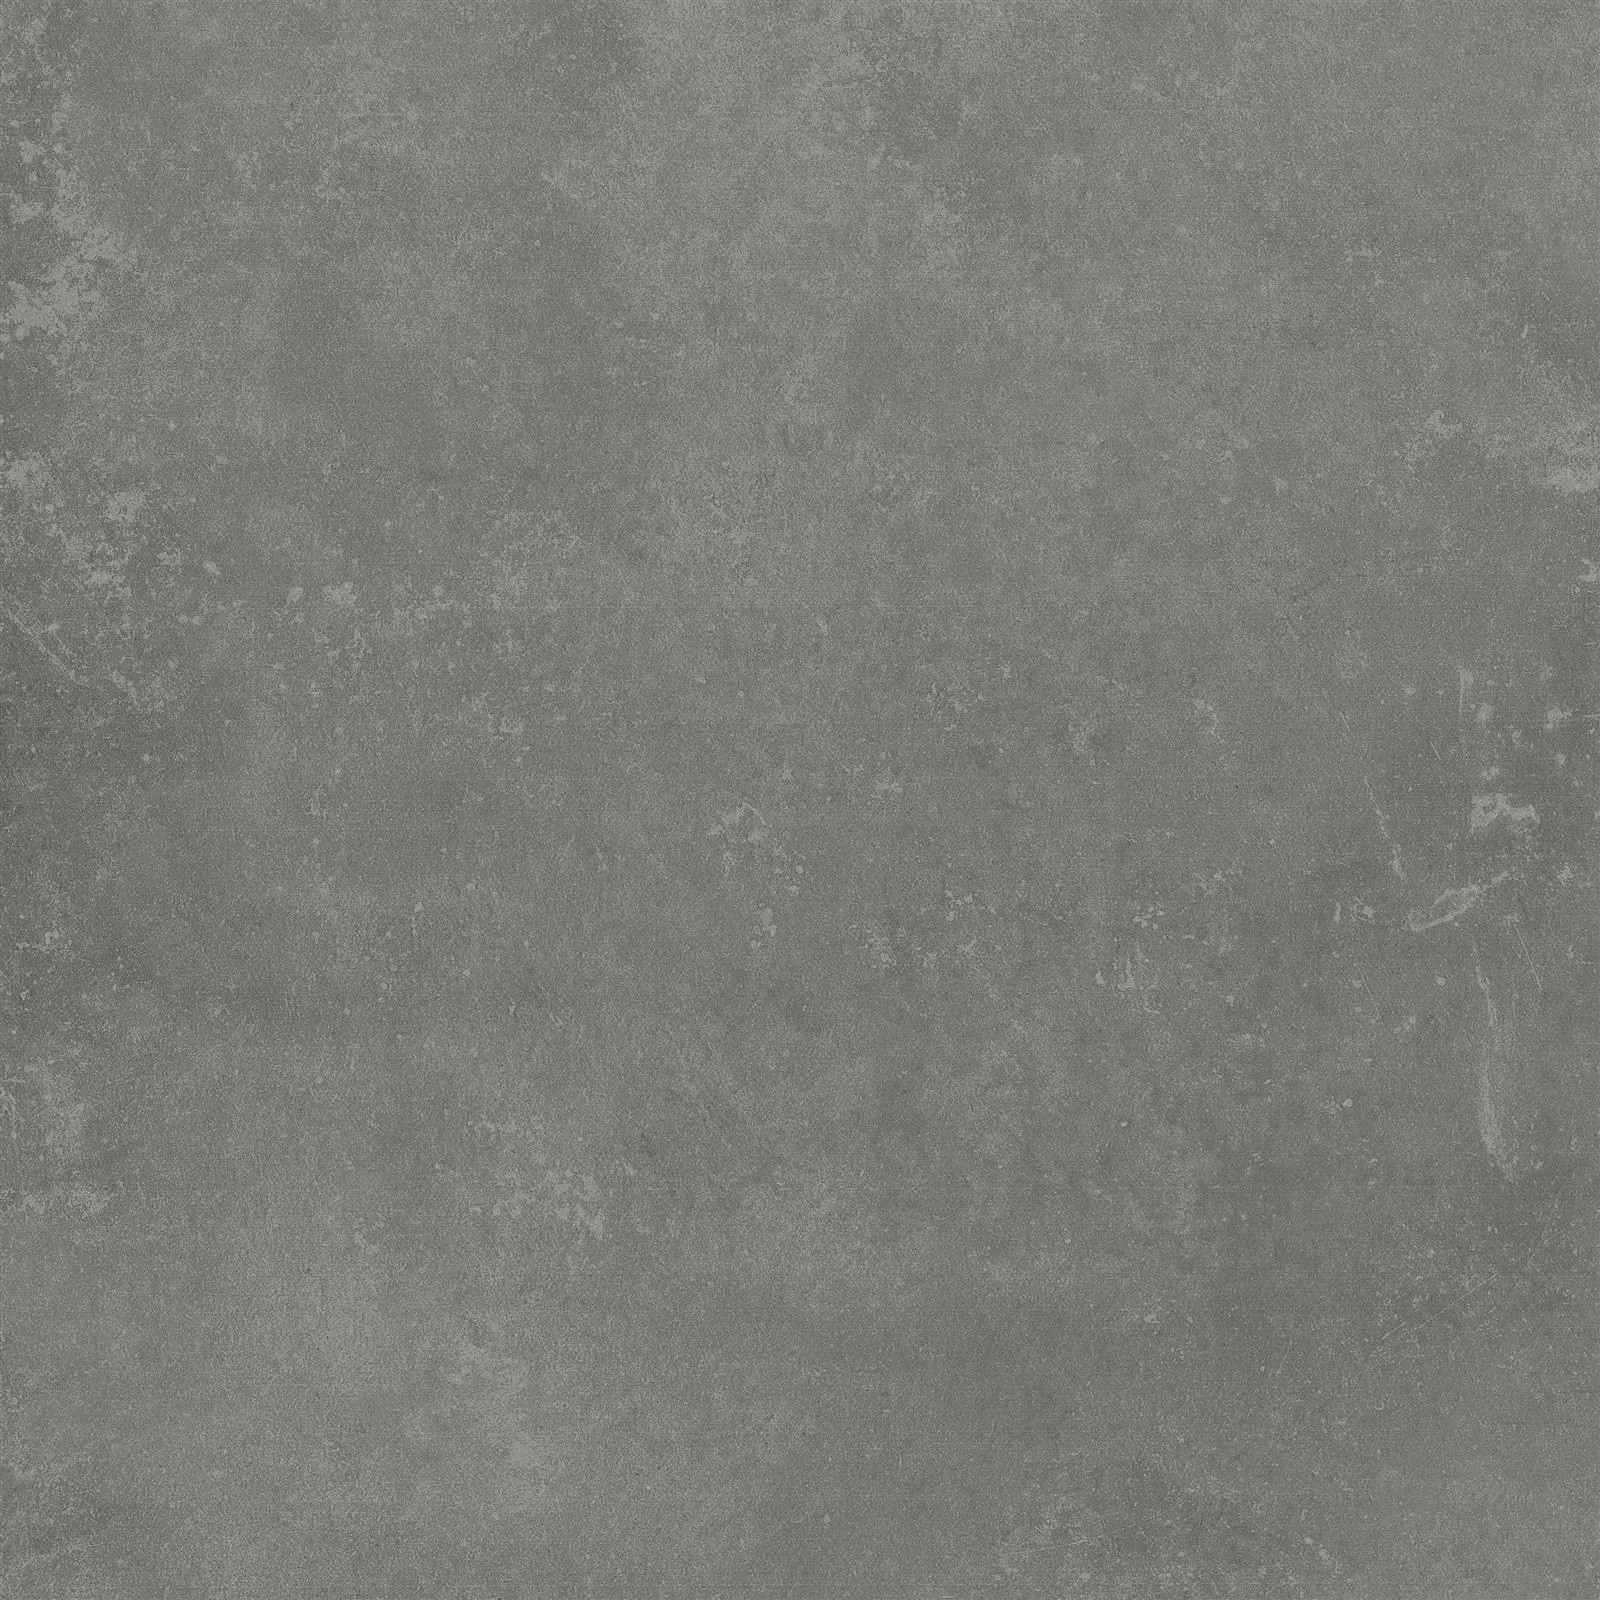 Podlahové Dlaždice Cementový Vzhled Nepal Slim Tmavě Šedá 60x60cm